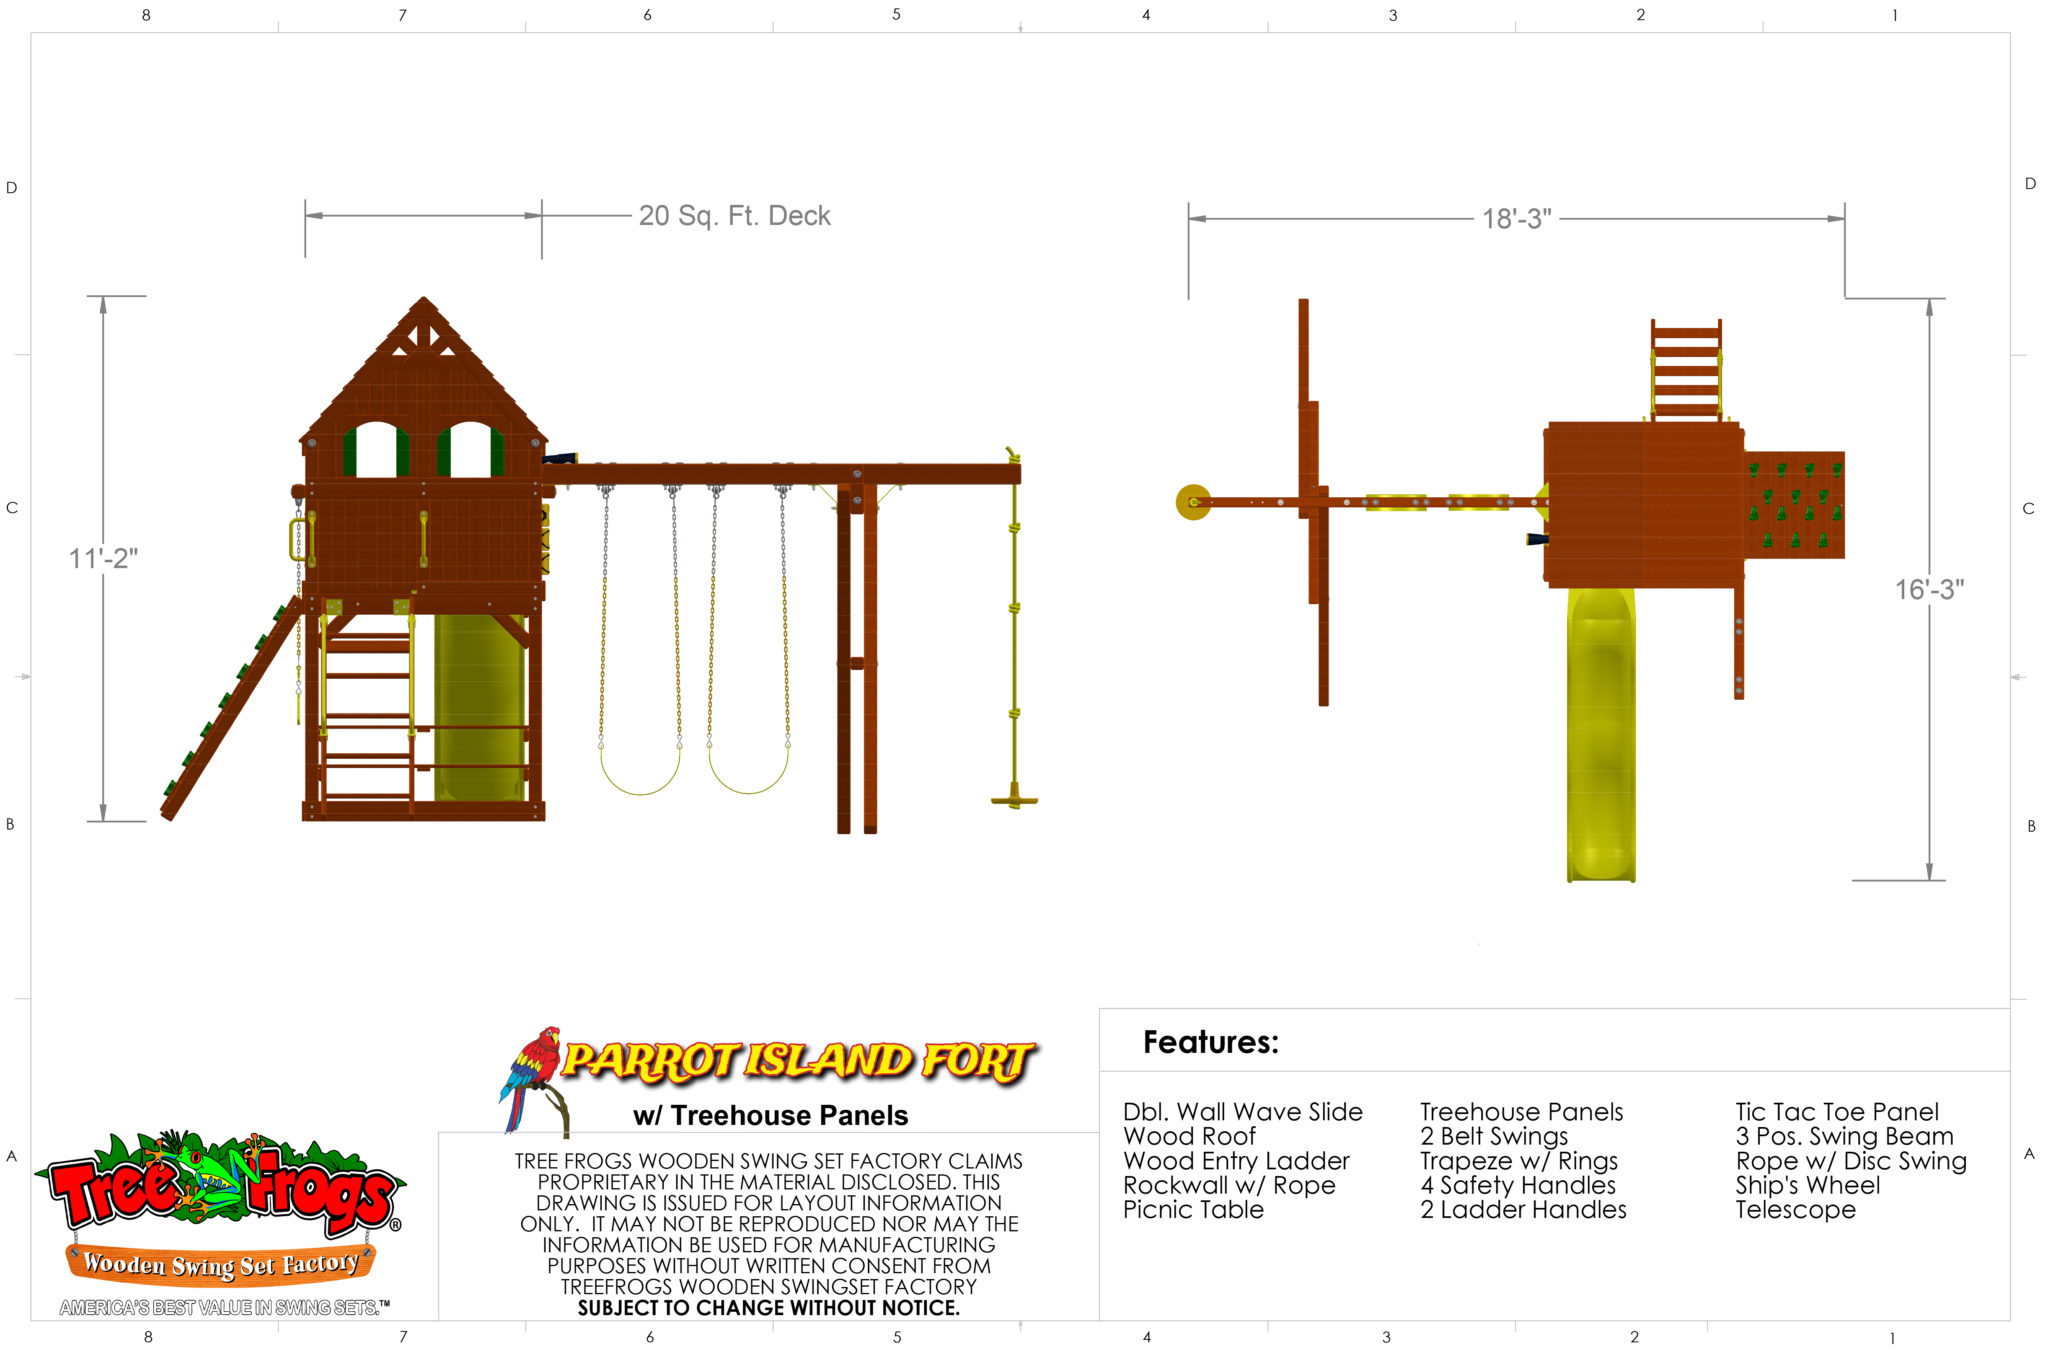 Pg 10T - Parrot Island Fort - Treehouse Panels